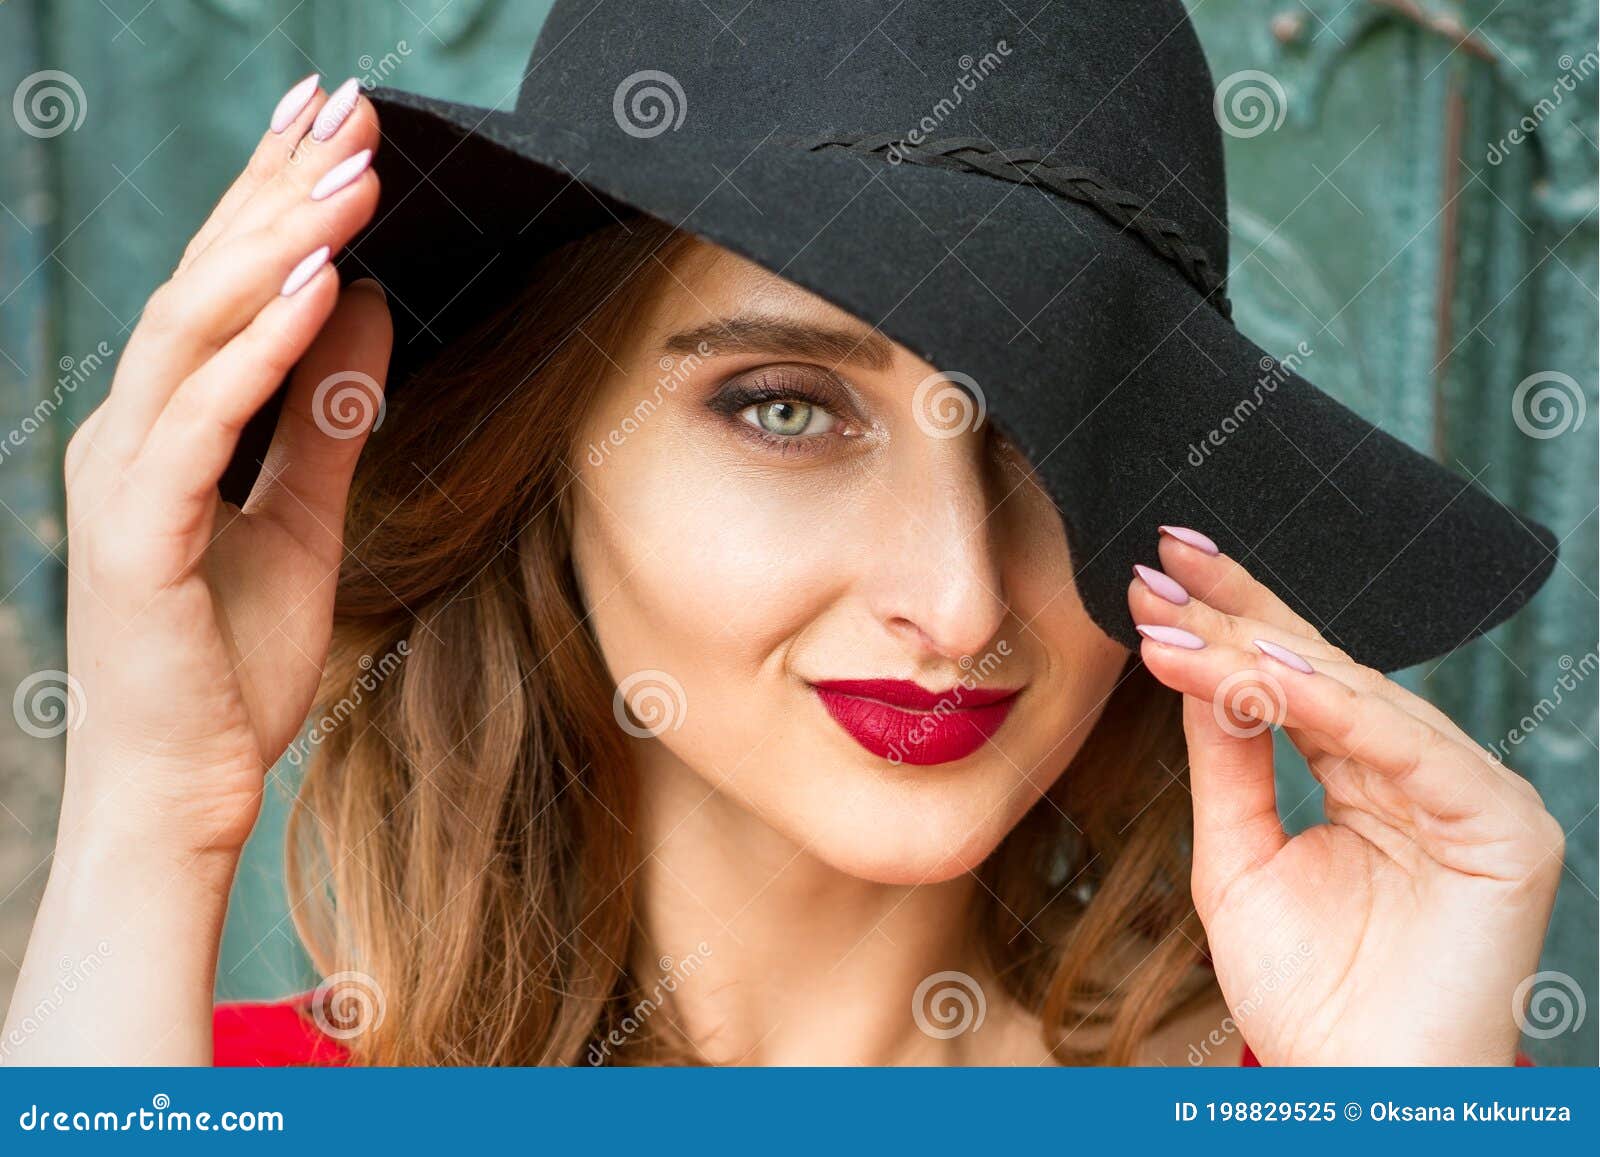 Woman in Red Dress Wearing Black Hat Stock Image - Image of dark ...